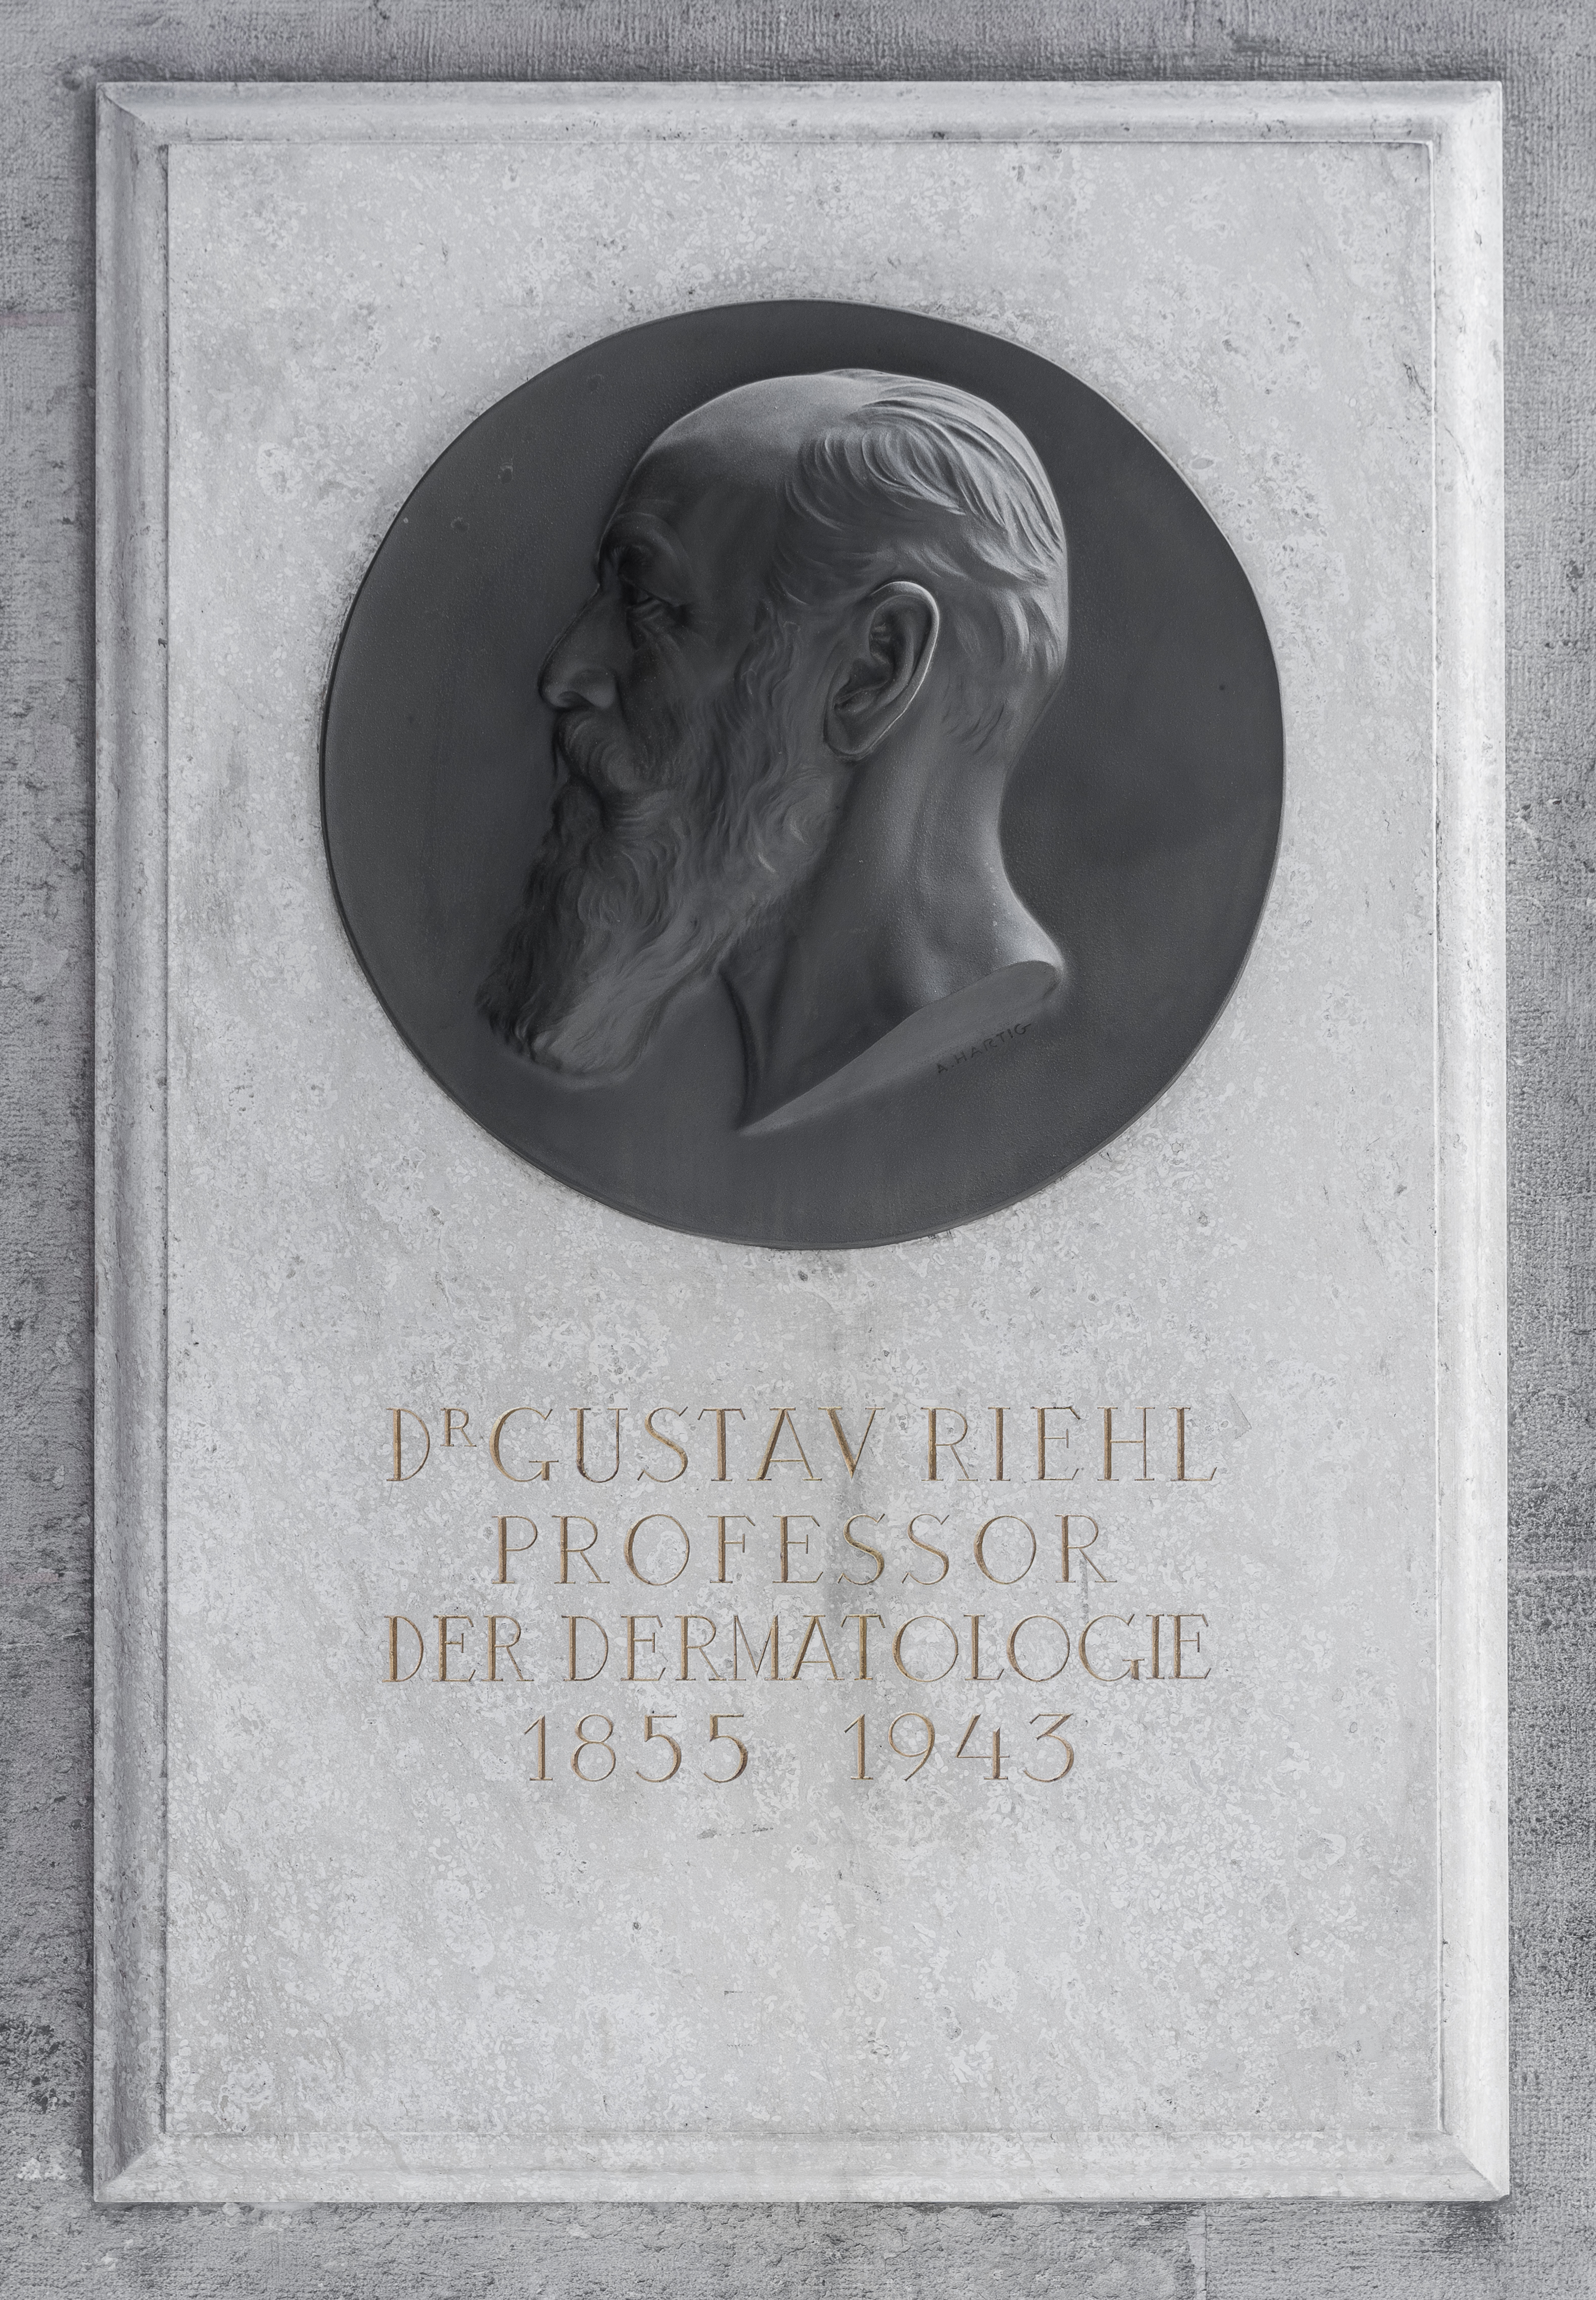 Gustav Riehl (1855-1943), Nr. 92 basrelief (bronze) in the Arkadenhof of the University of Vienna-2303-HDR-Bearbeitet